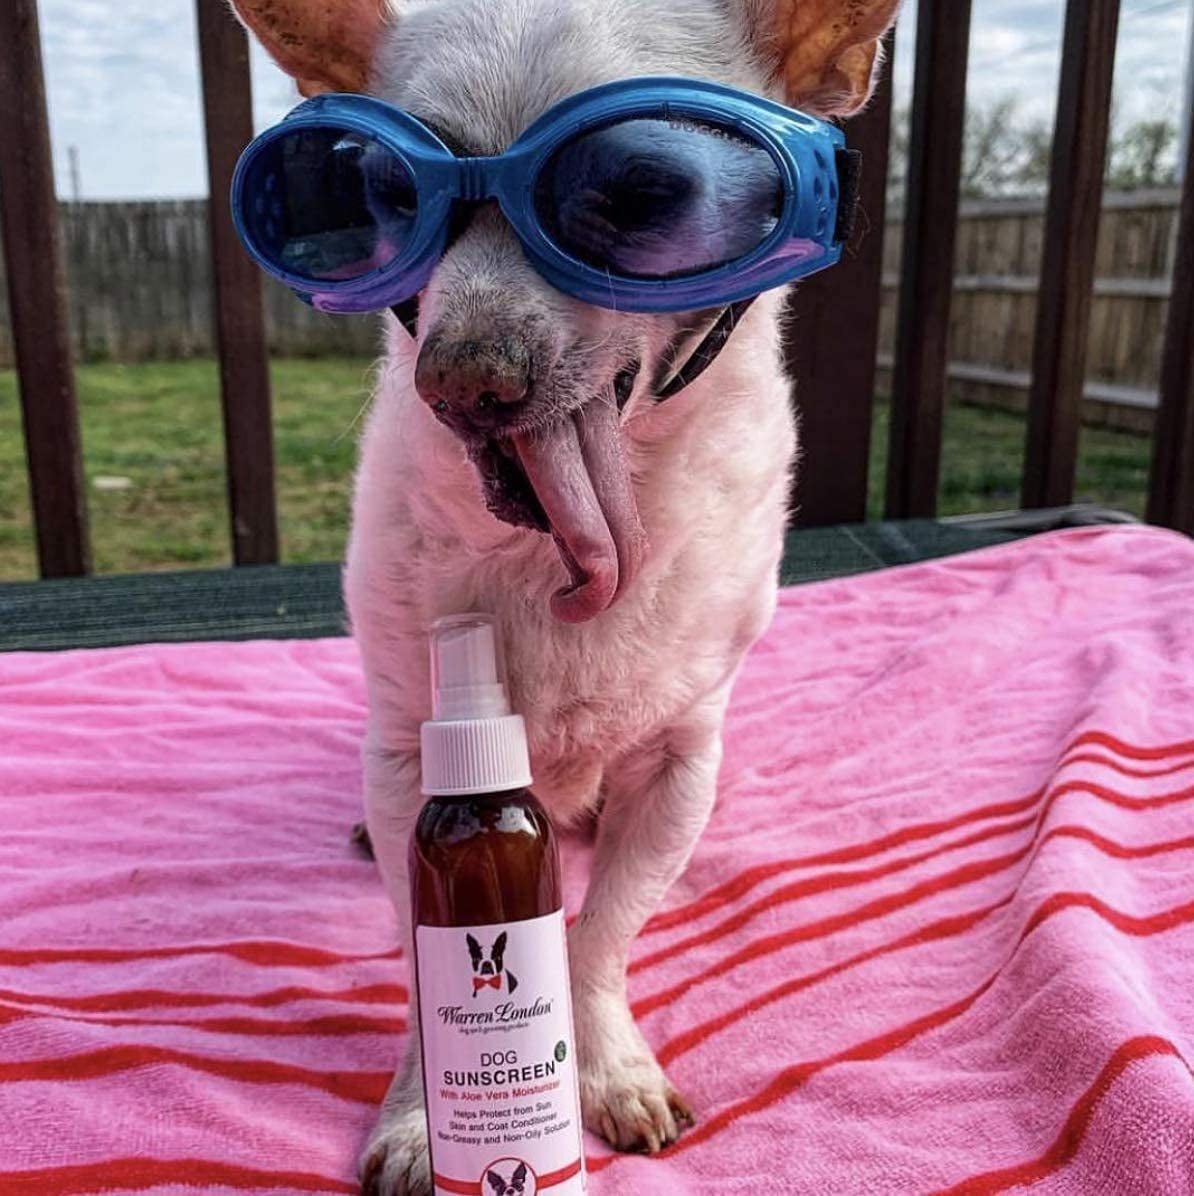 the dog sunscreen spray next to a small dog